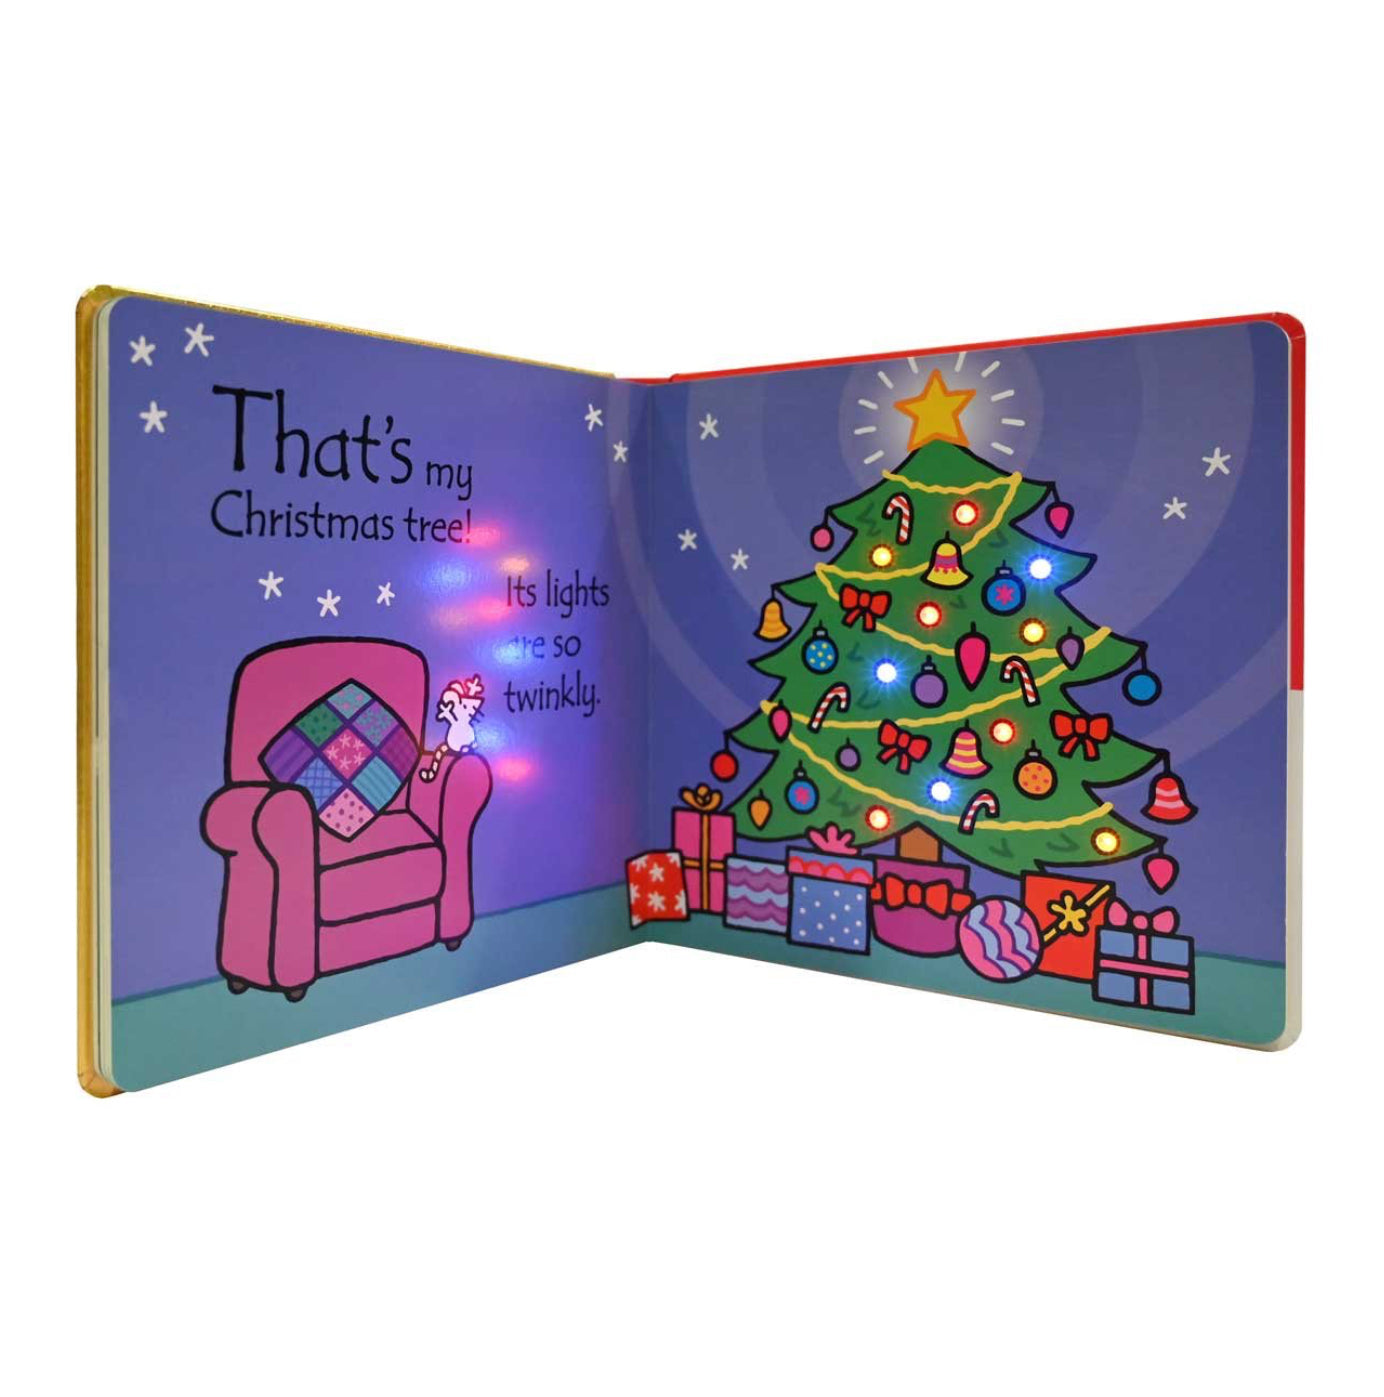 That’s Not My Christmas Tree Book & Jellycat Little Fraser Fir Christmas Tree